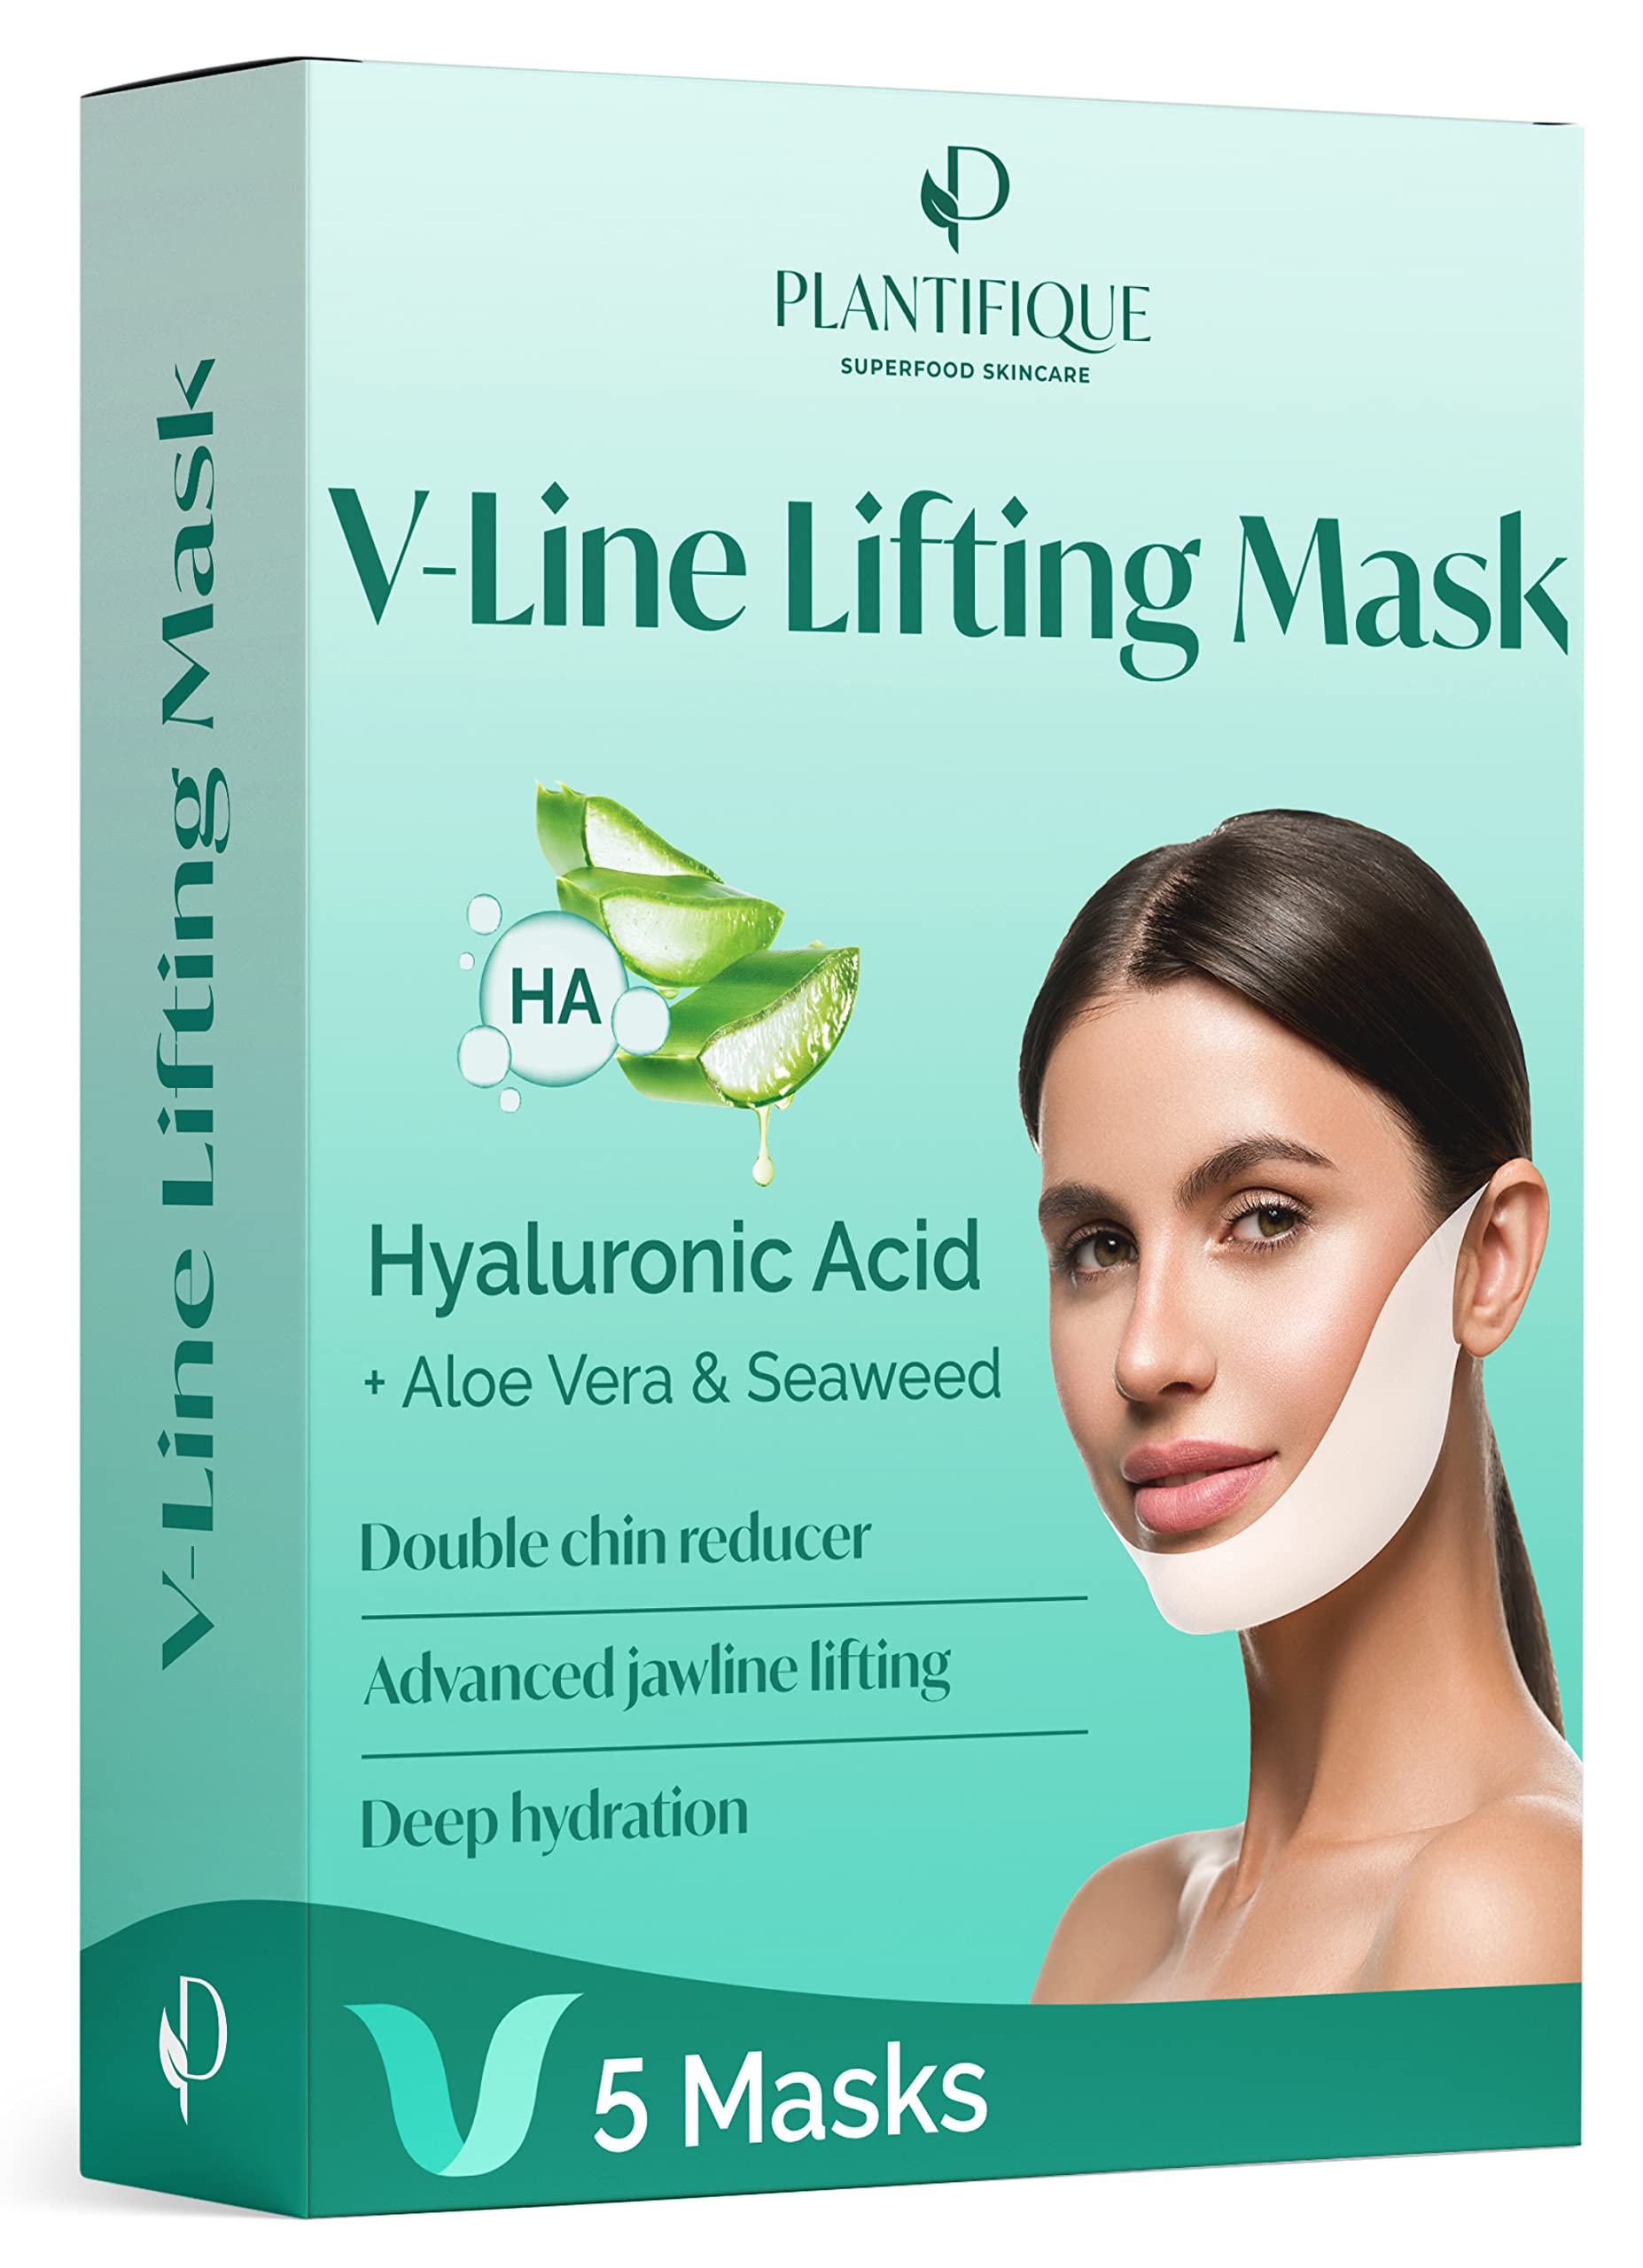 PLANTIFIQUE V-Line Lifting Face Mask - 5 PCS V Shape Face Lift Tape Mask  for Skin